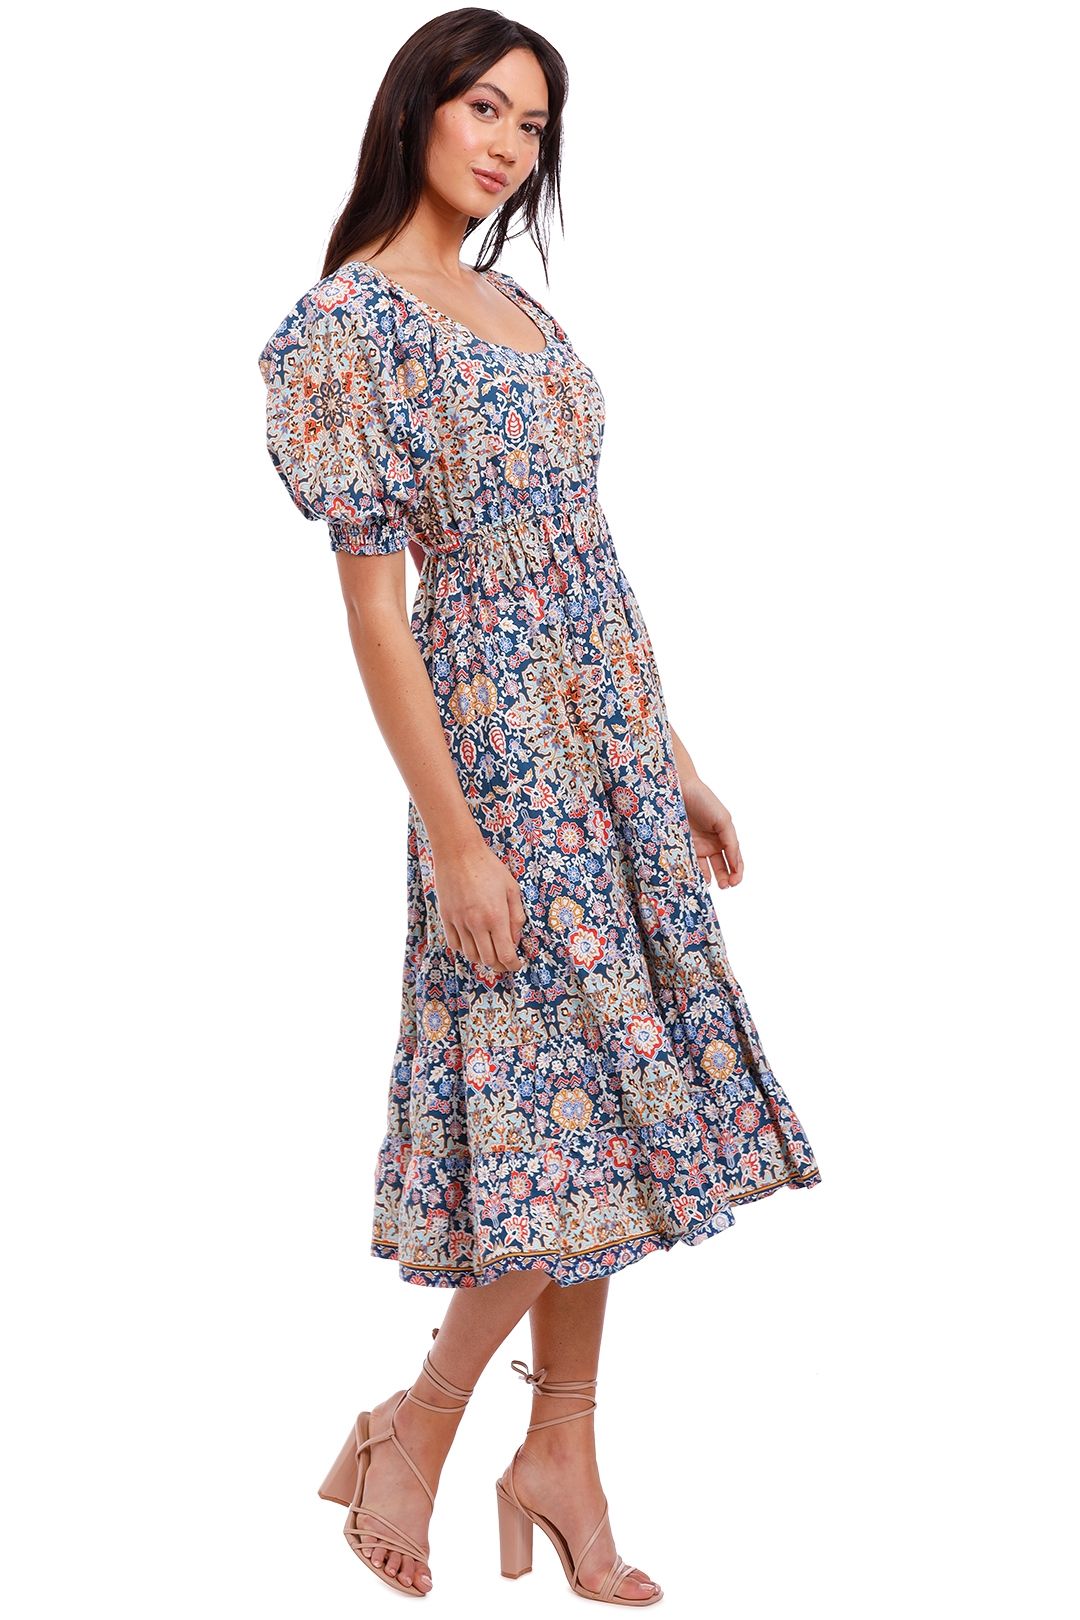 Kachel Kelly Elasticated Waist Cotton Midi Dress Multi Print